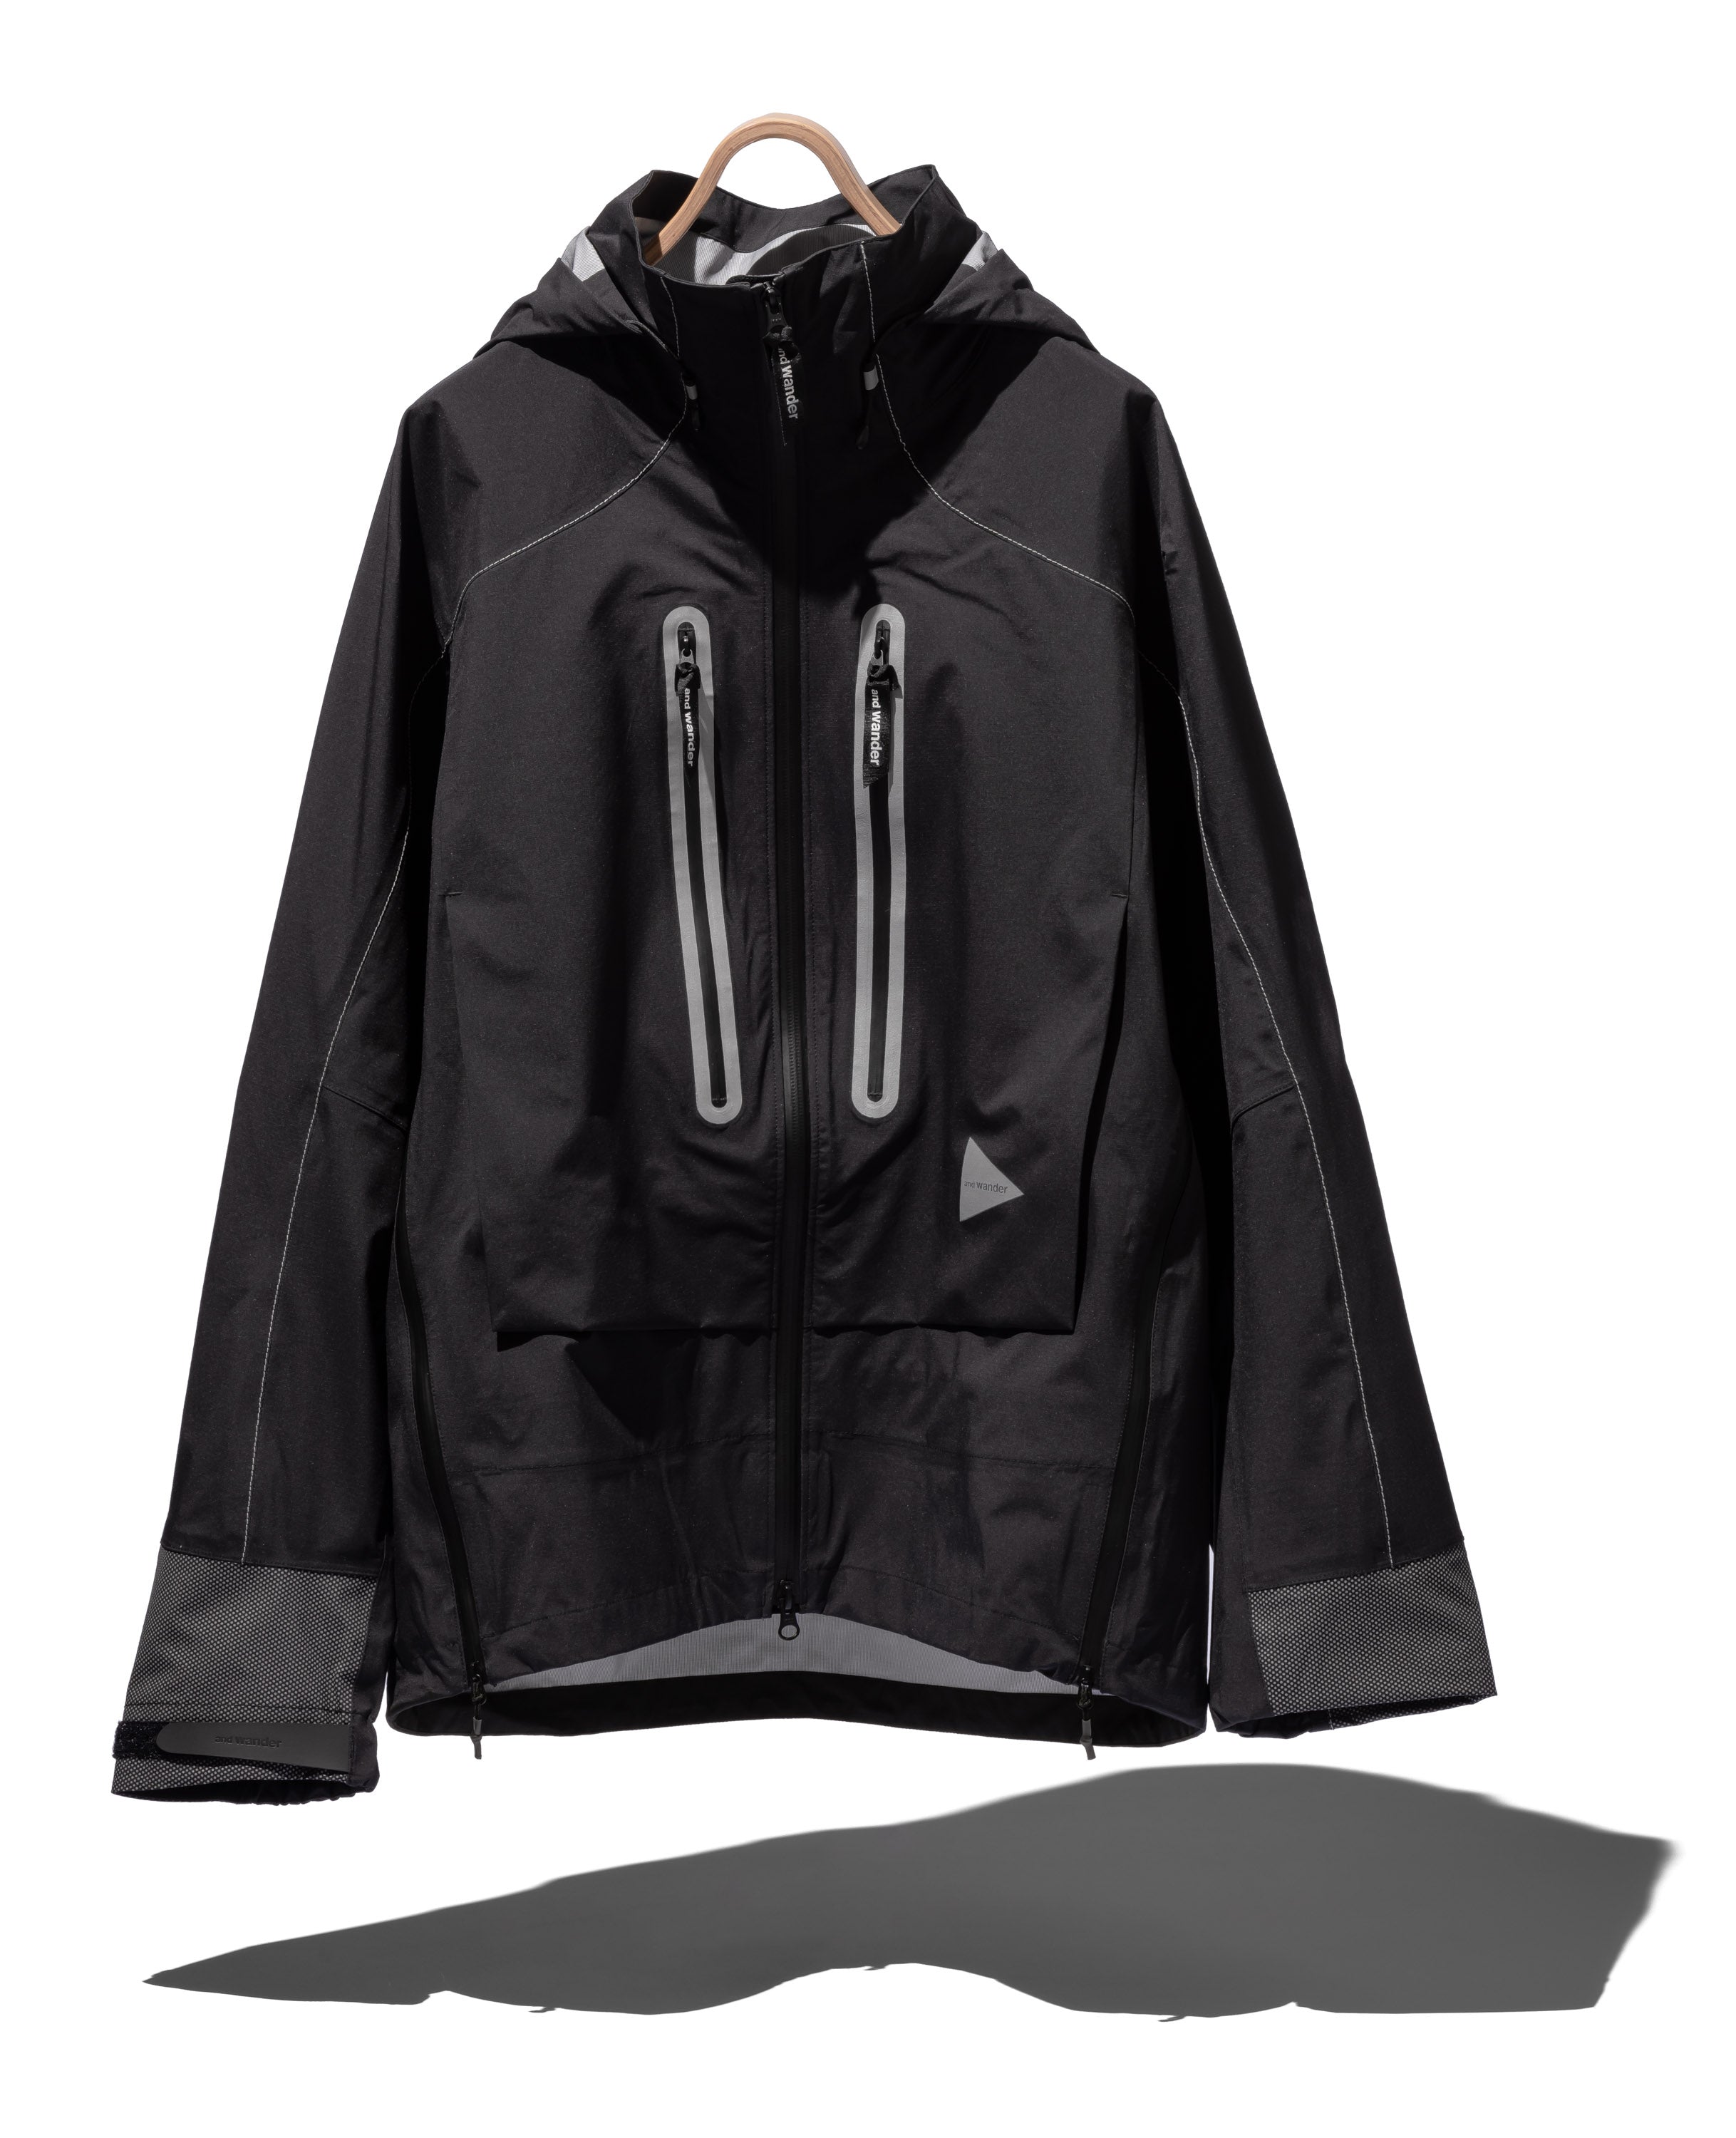 PERTEX SHIELD rain jacket